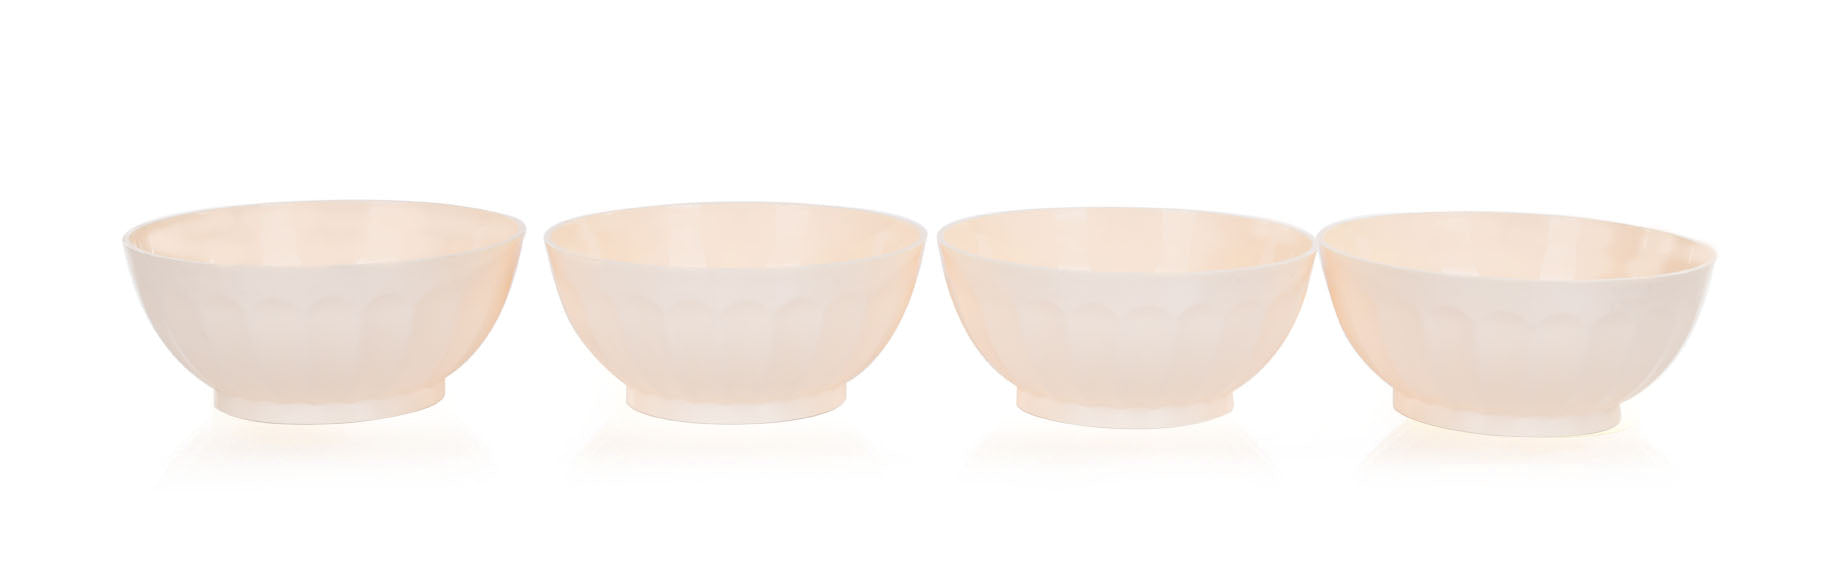 Mintra Unbreakable Plastic Bowl - 4 Pack Large 1.8 L - Mintra USA mintra-unbreakable-plastic-bowl-4-pack-large-1-8-l/microwave plastic bowl safe/Large Plastic Cereal Bowl